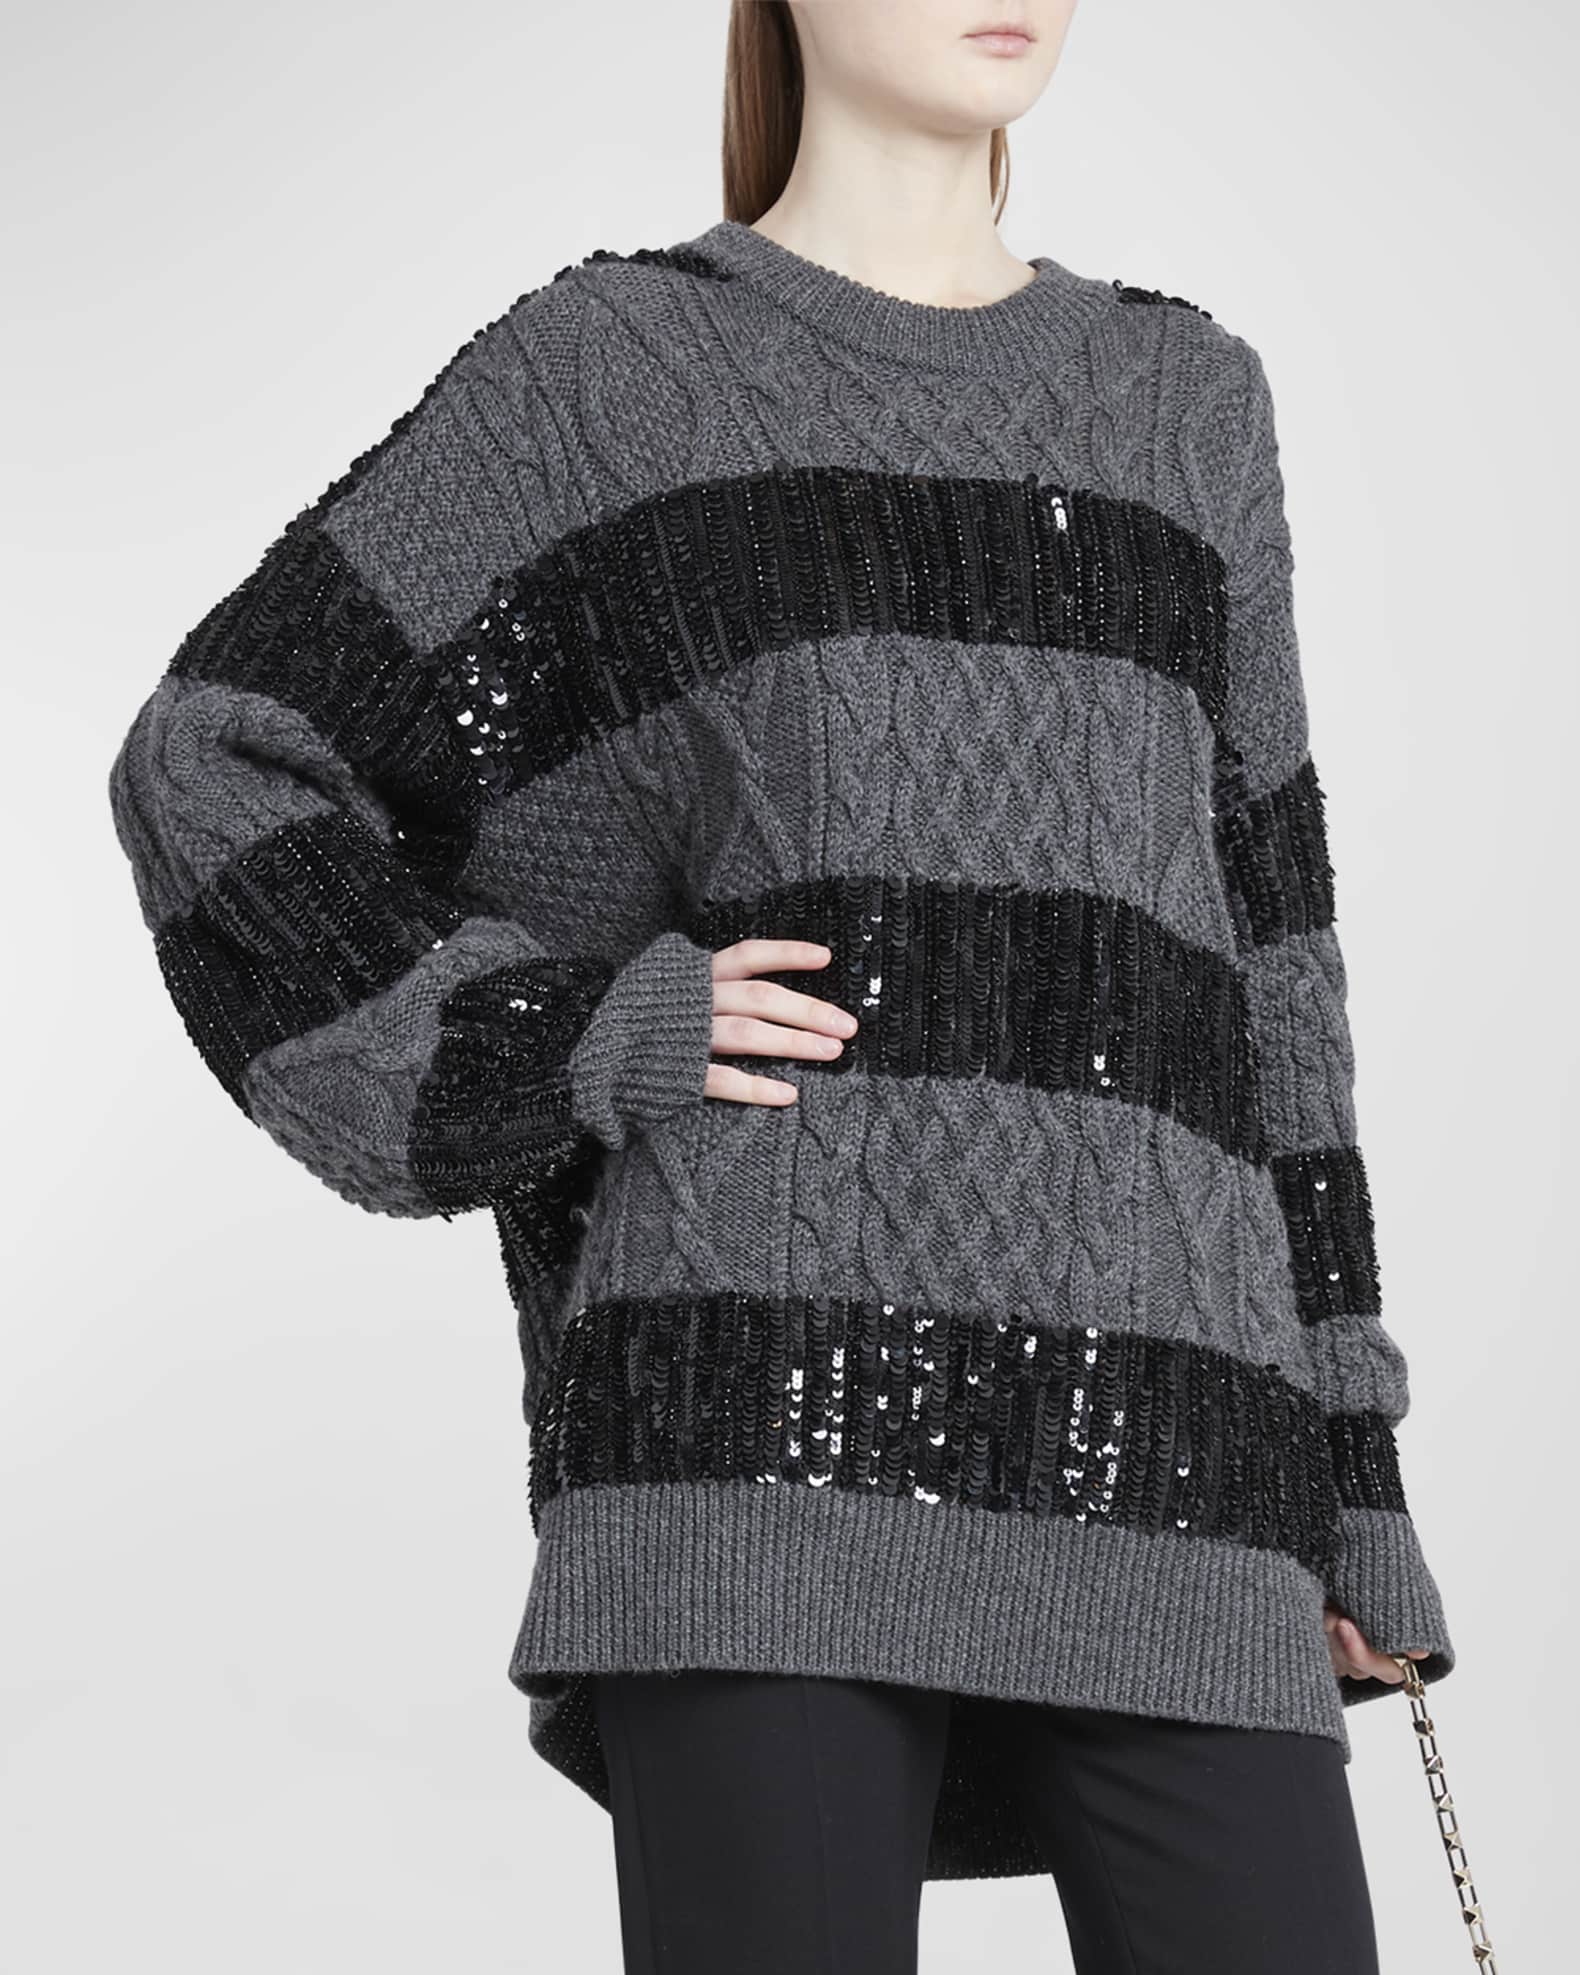 Louis Vuitton Louis 4 Vuitton Knitted Pullover Geranium. Size S0